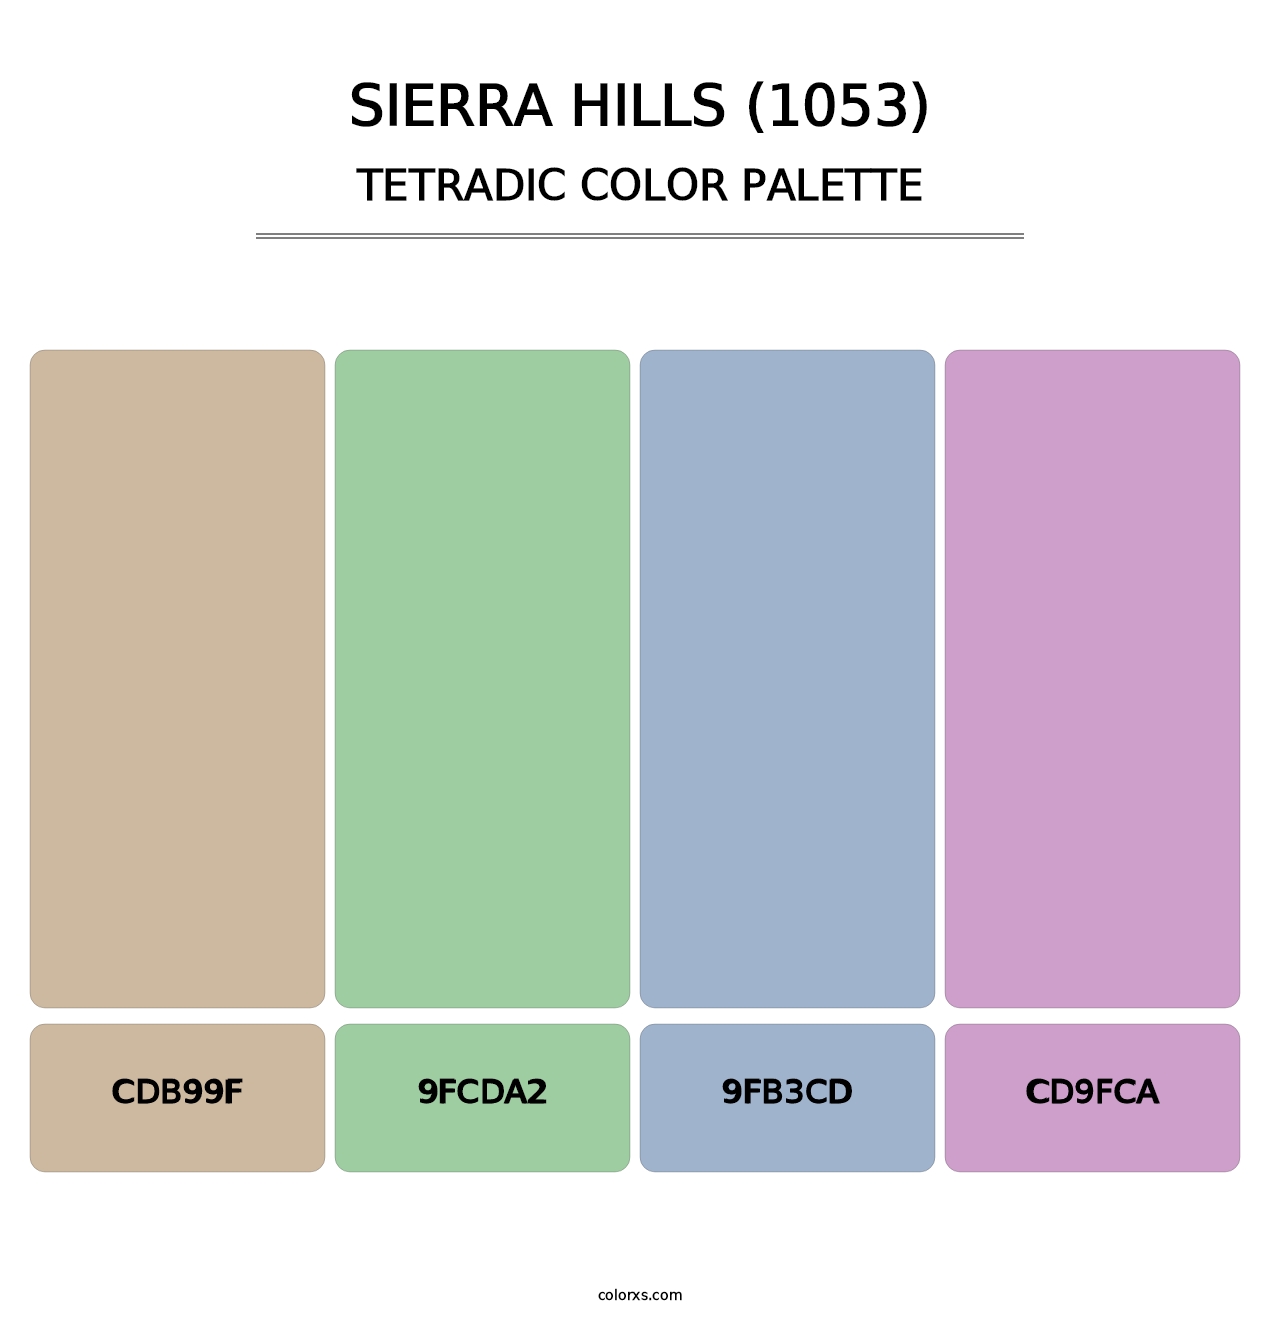 Sierra Hills (1053) - Tetradic Color Palette